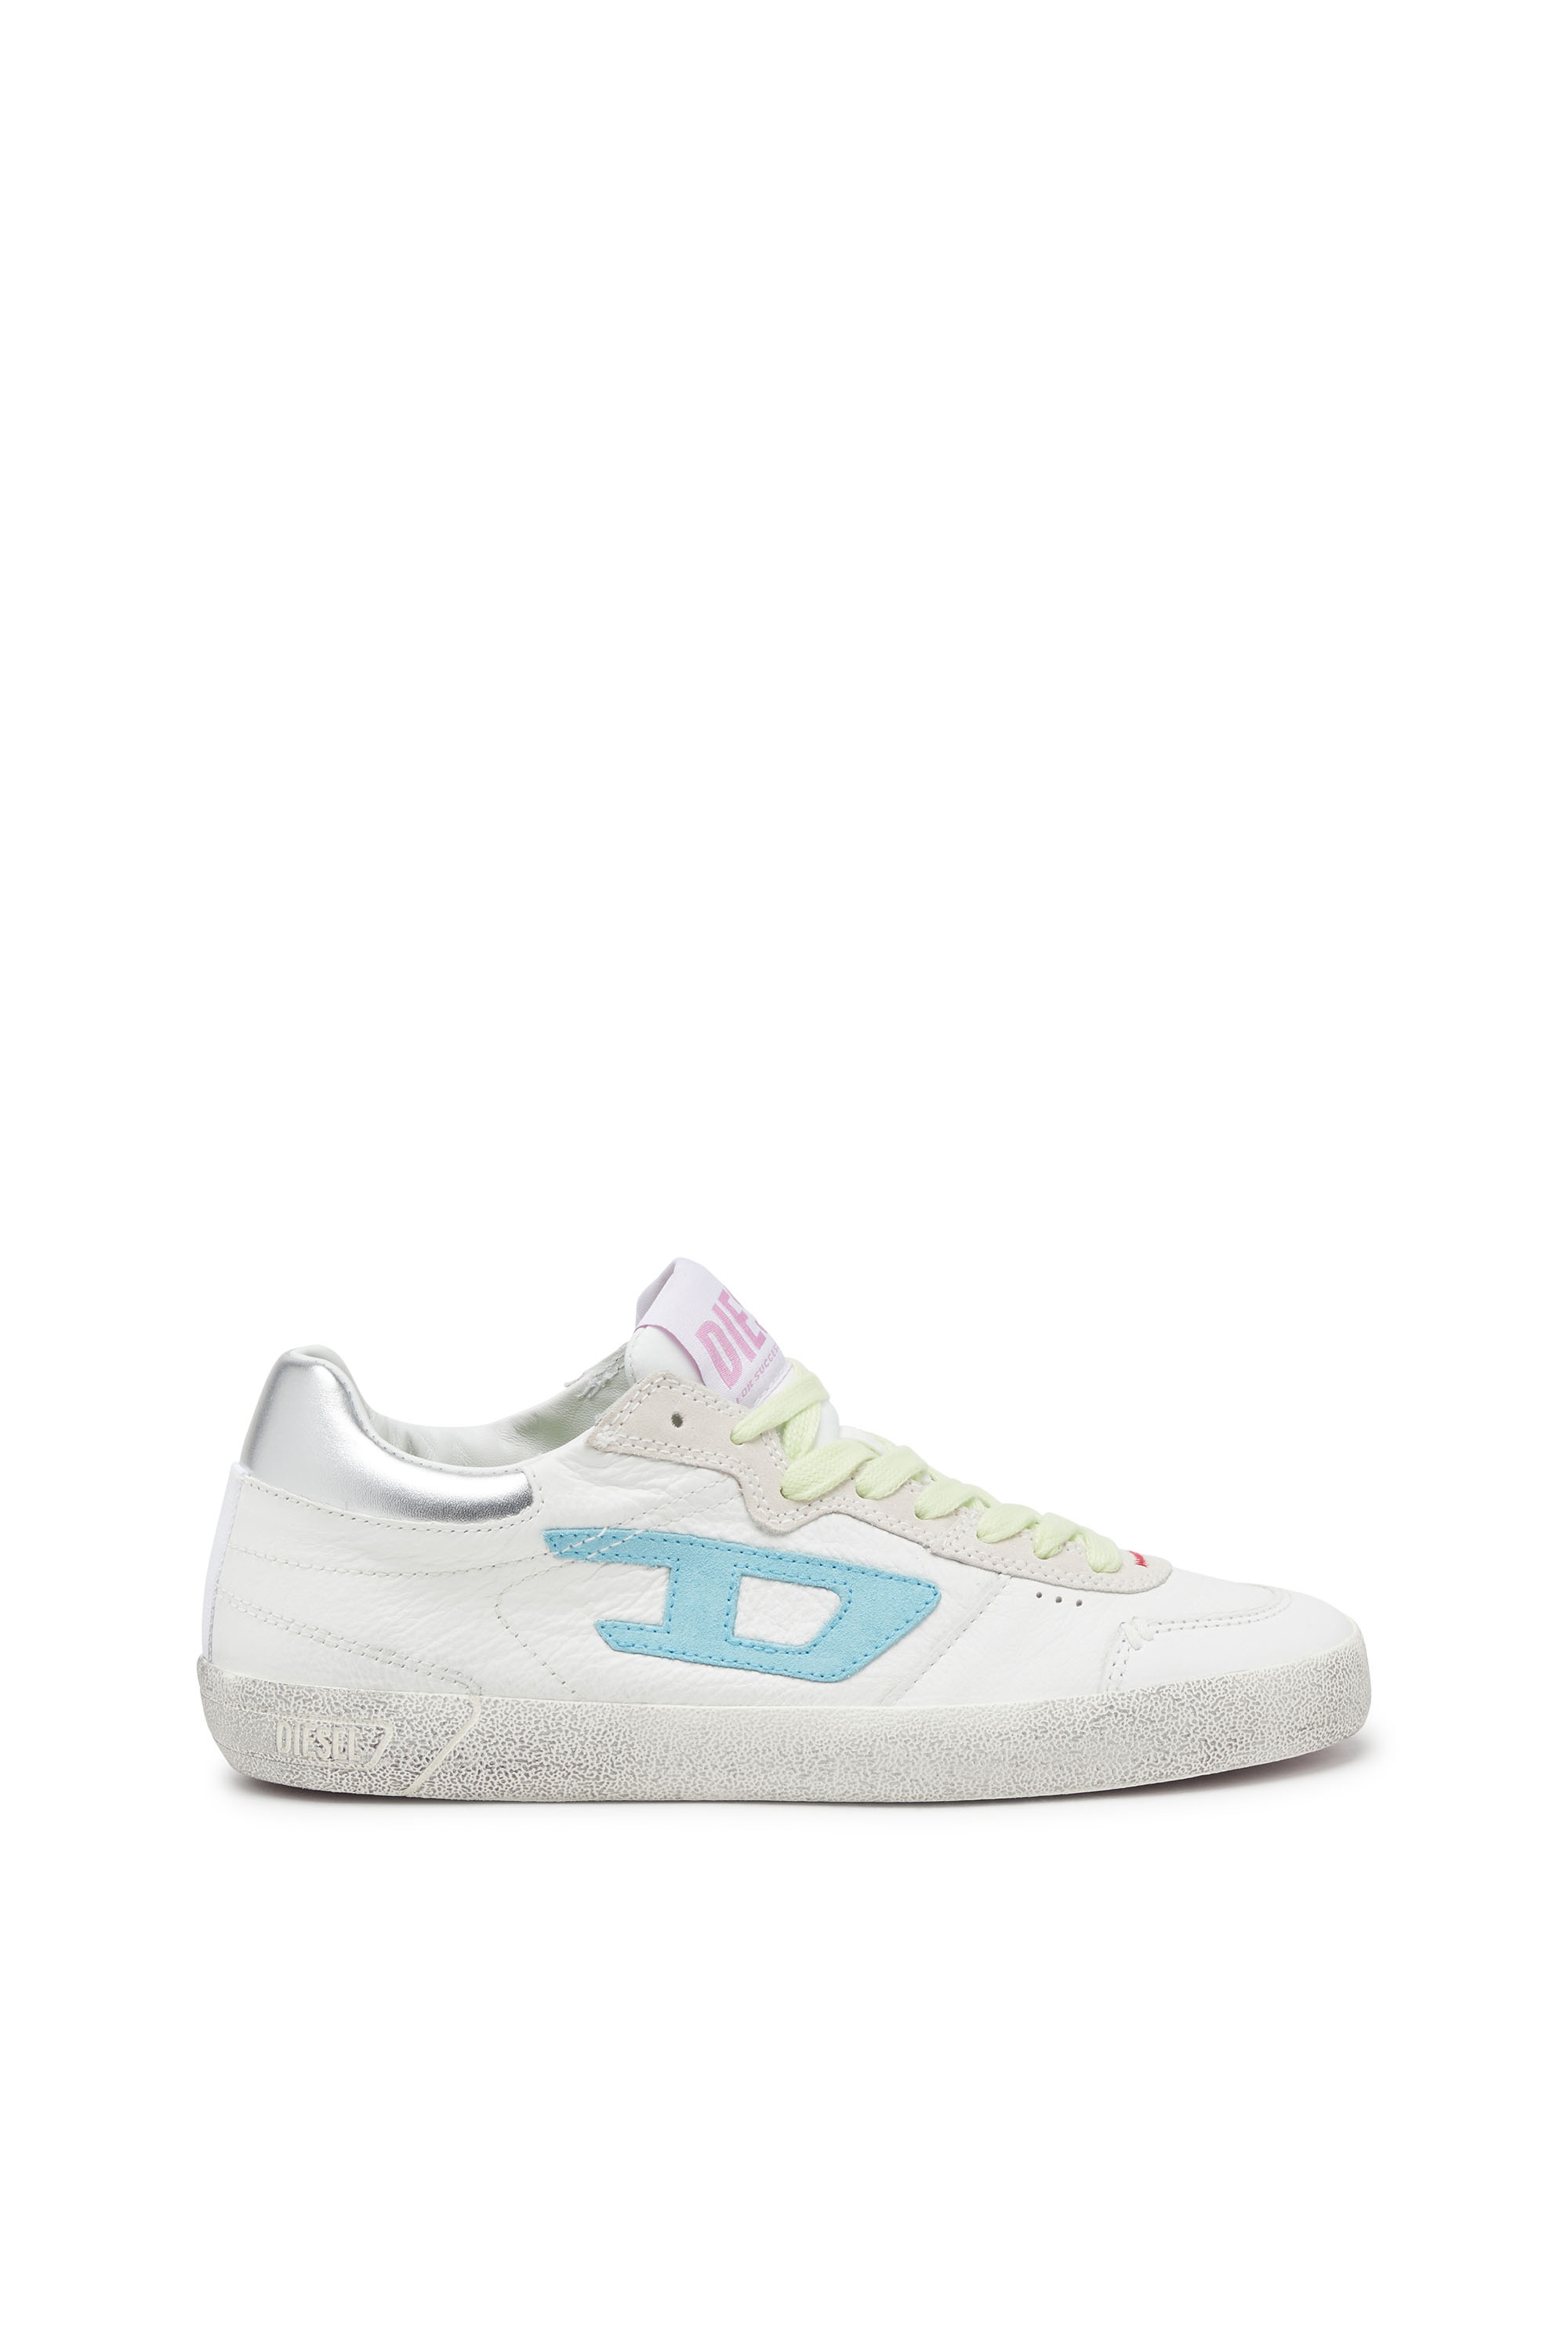 Diesel - S-Leroji Low W - Sneaker in pelle e suede color pastello - Sneakers - Donna - Multicolor